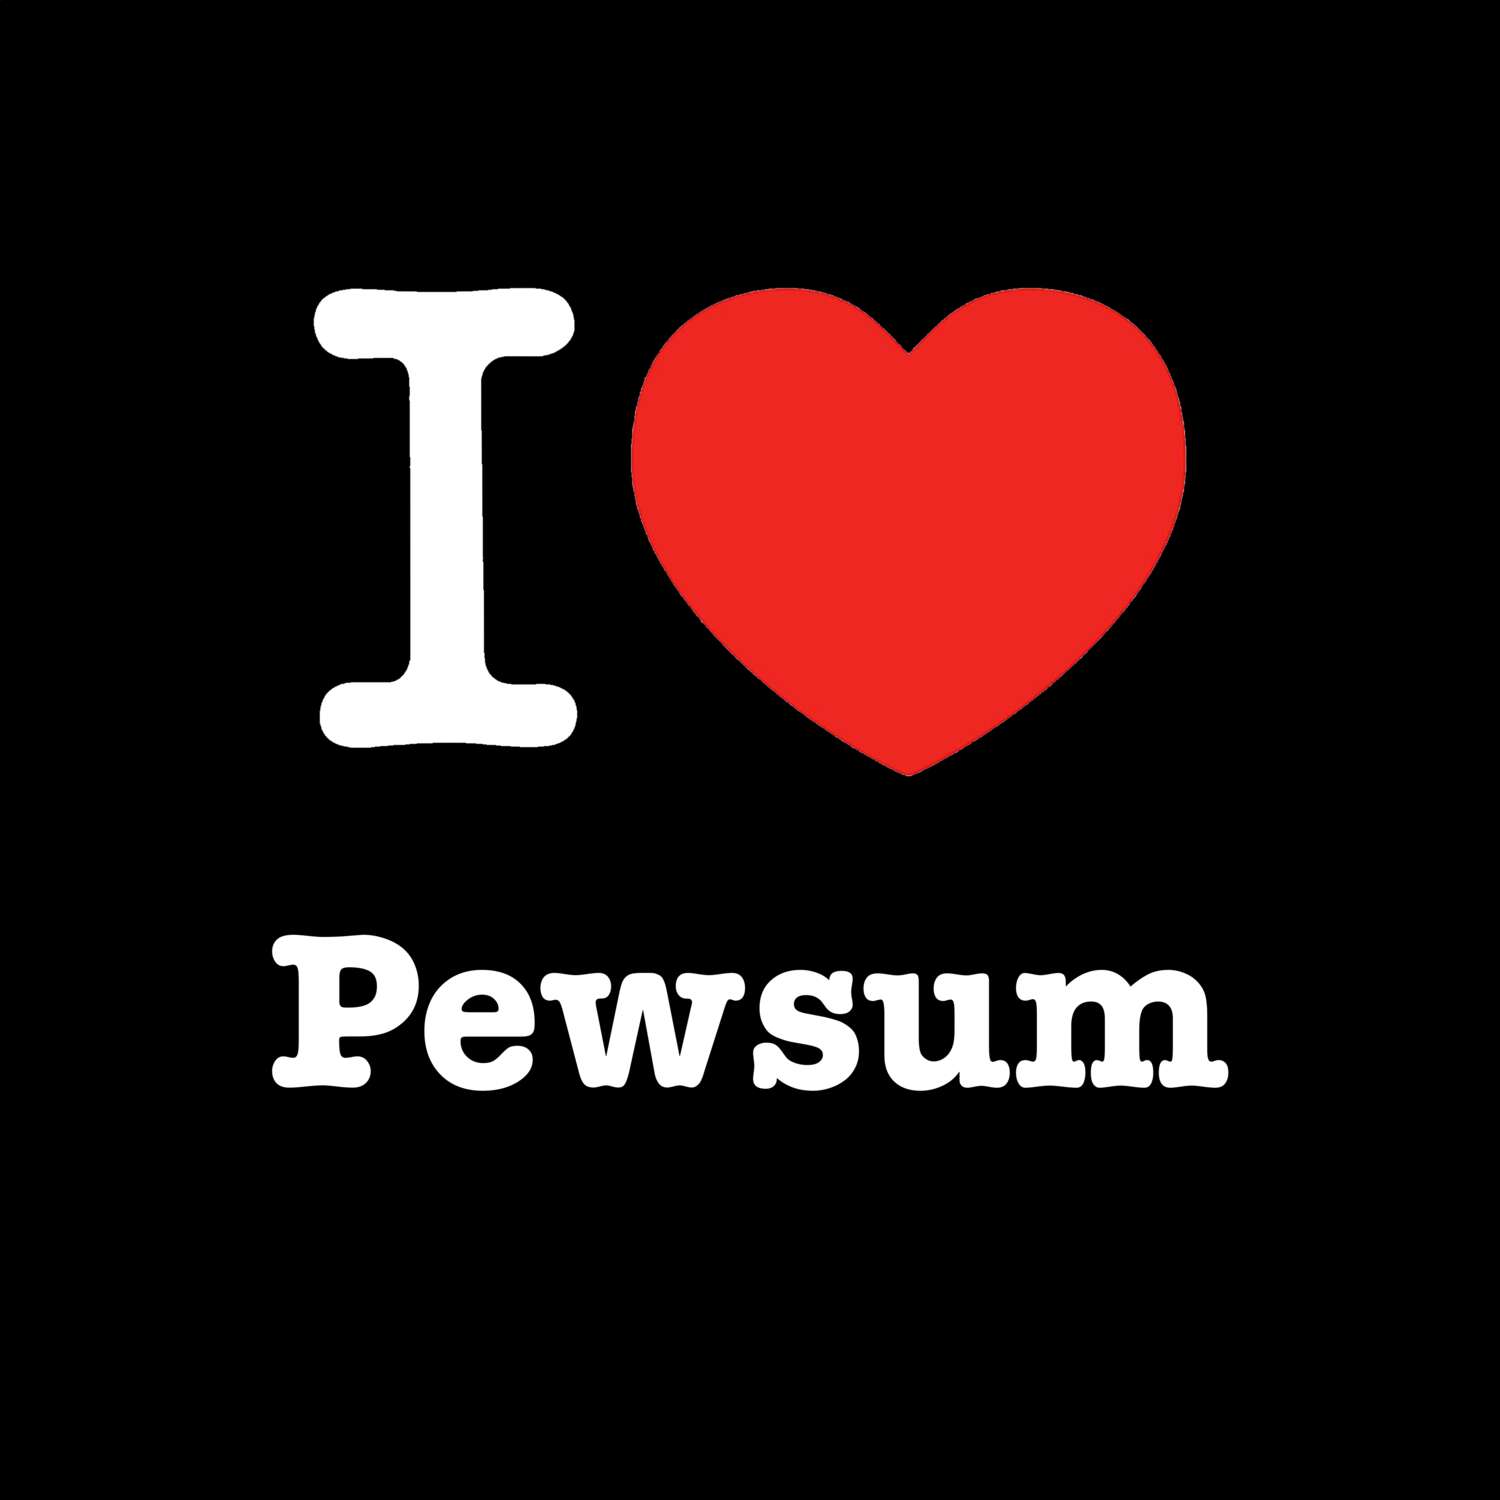 Pewsum T-Shirt »I love«